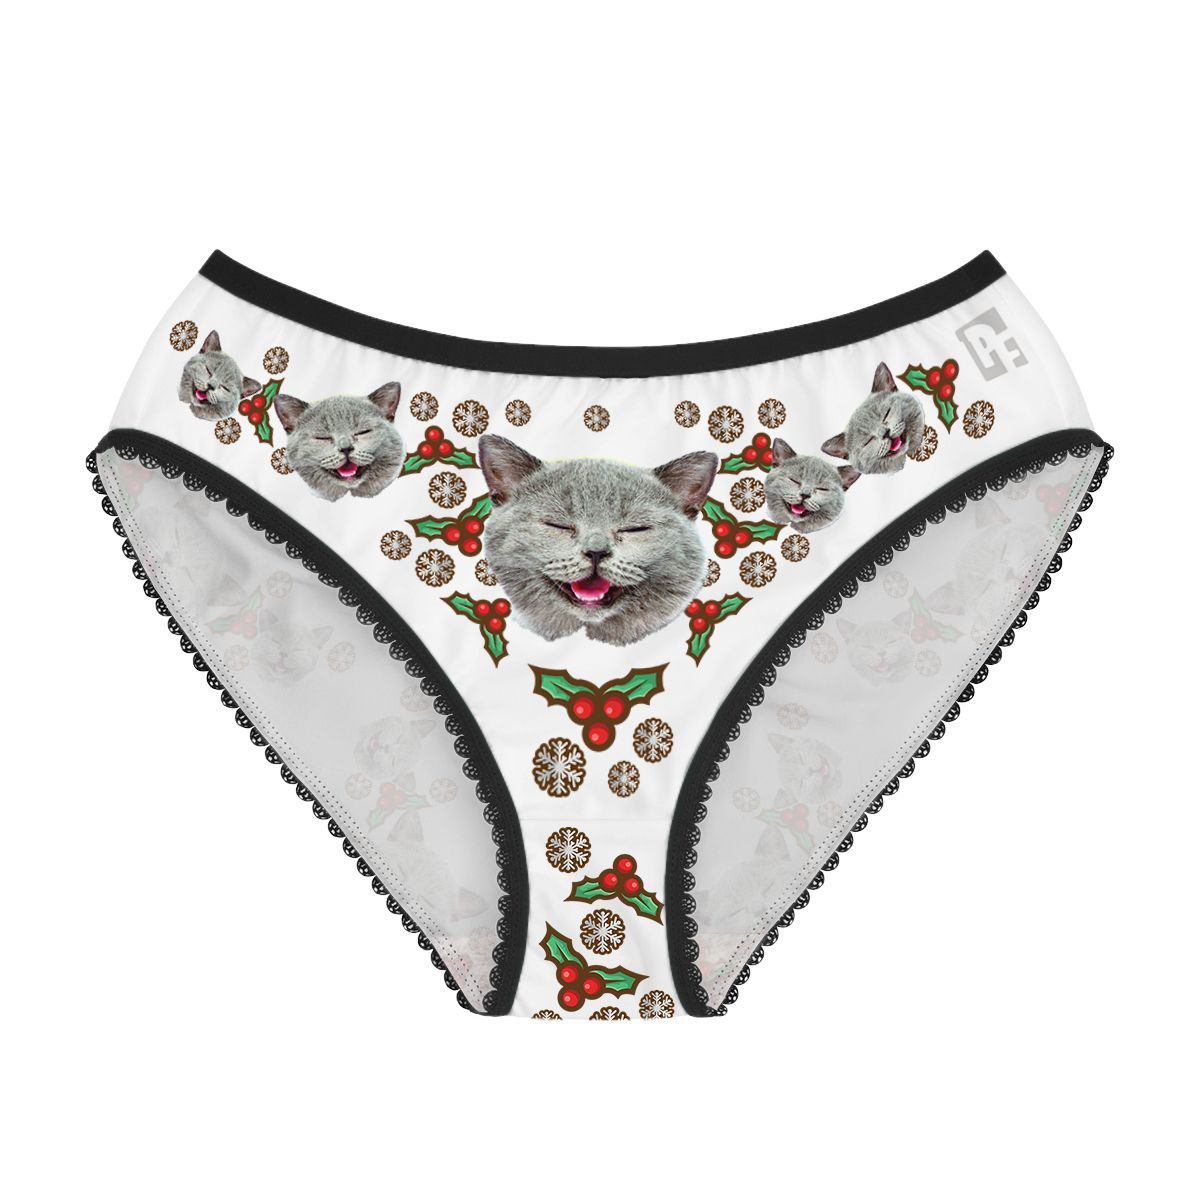 White Mistletoe women's underwear briefs personalized with photo printed on them